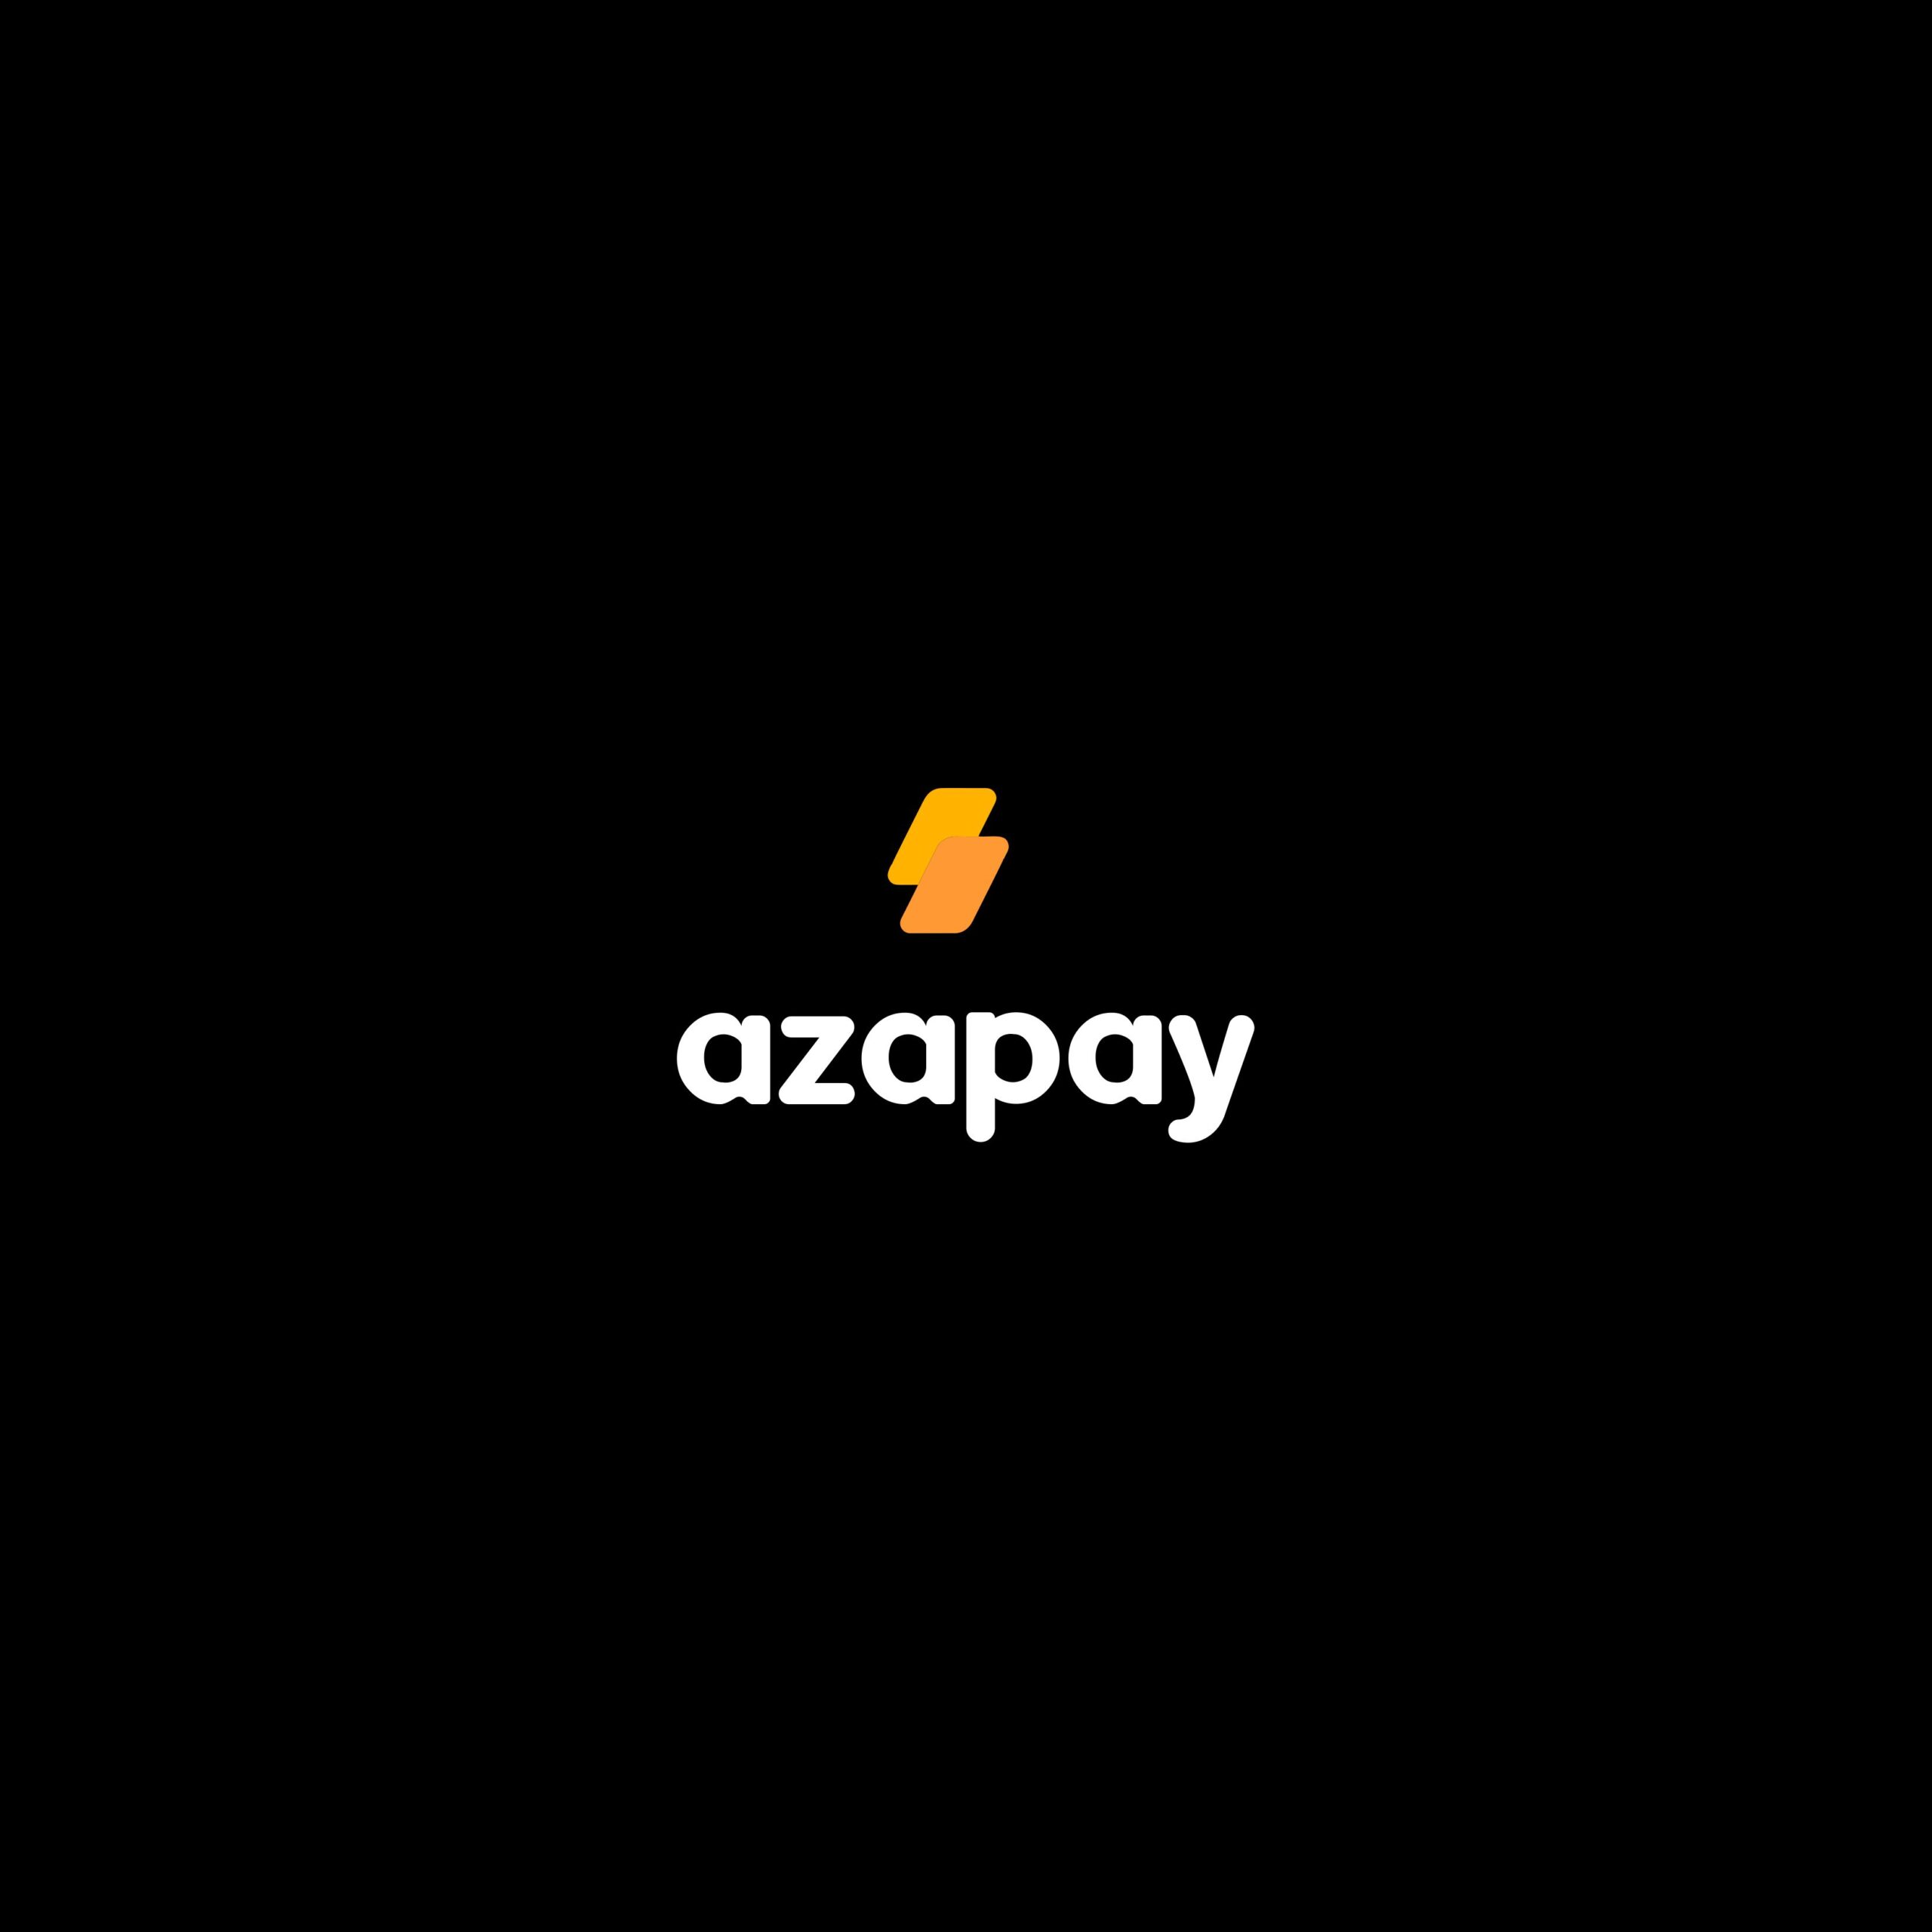 AZApay-branding-1.22-scaled-1-1-1.jpg